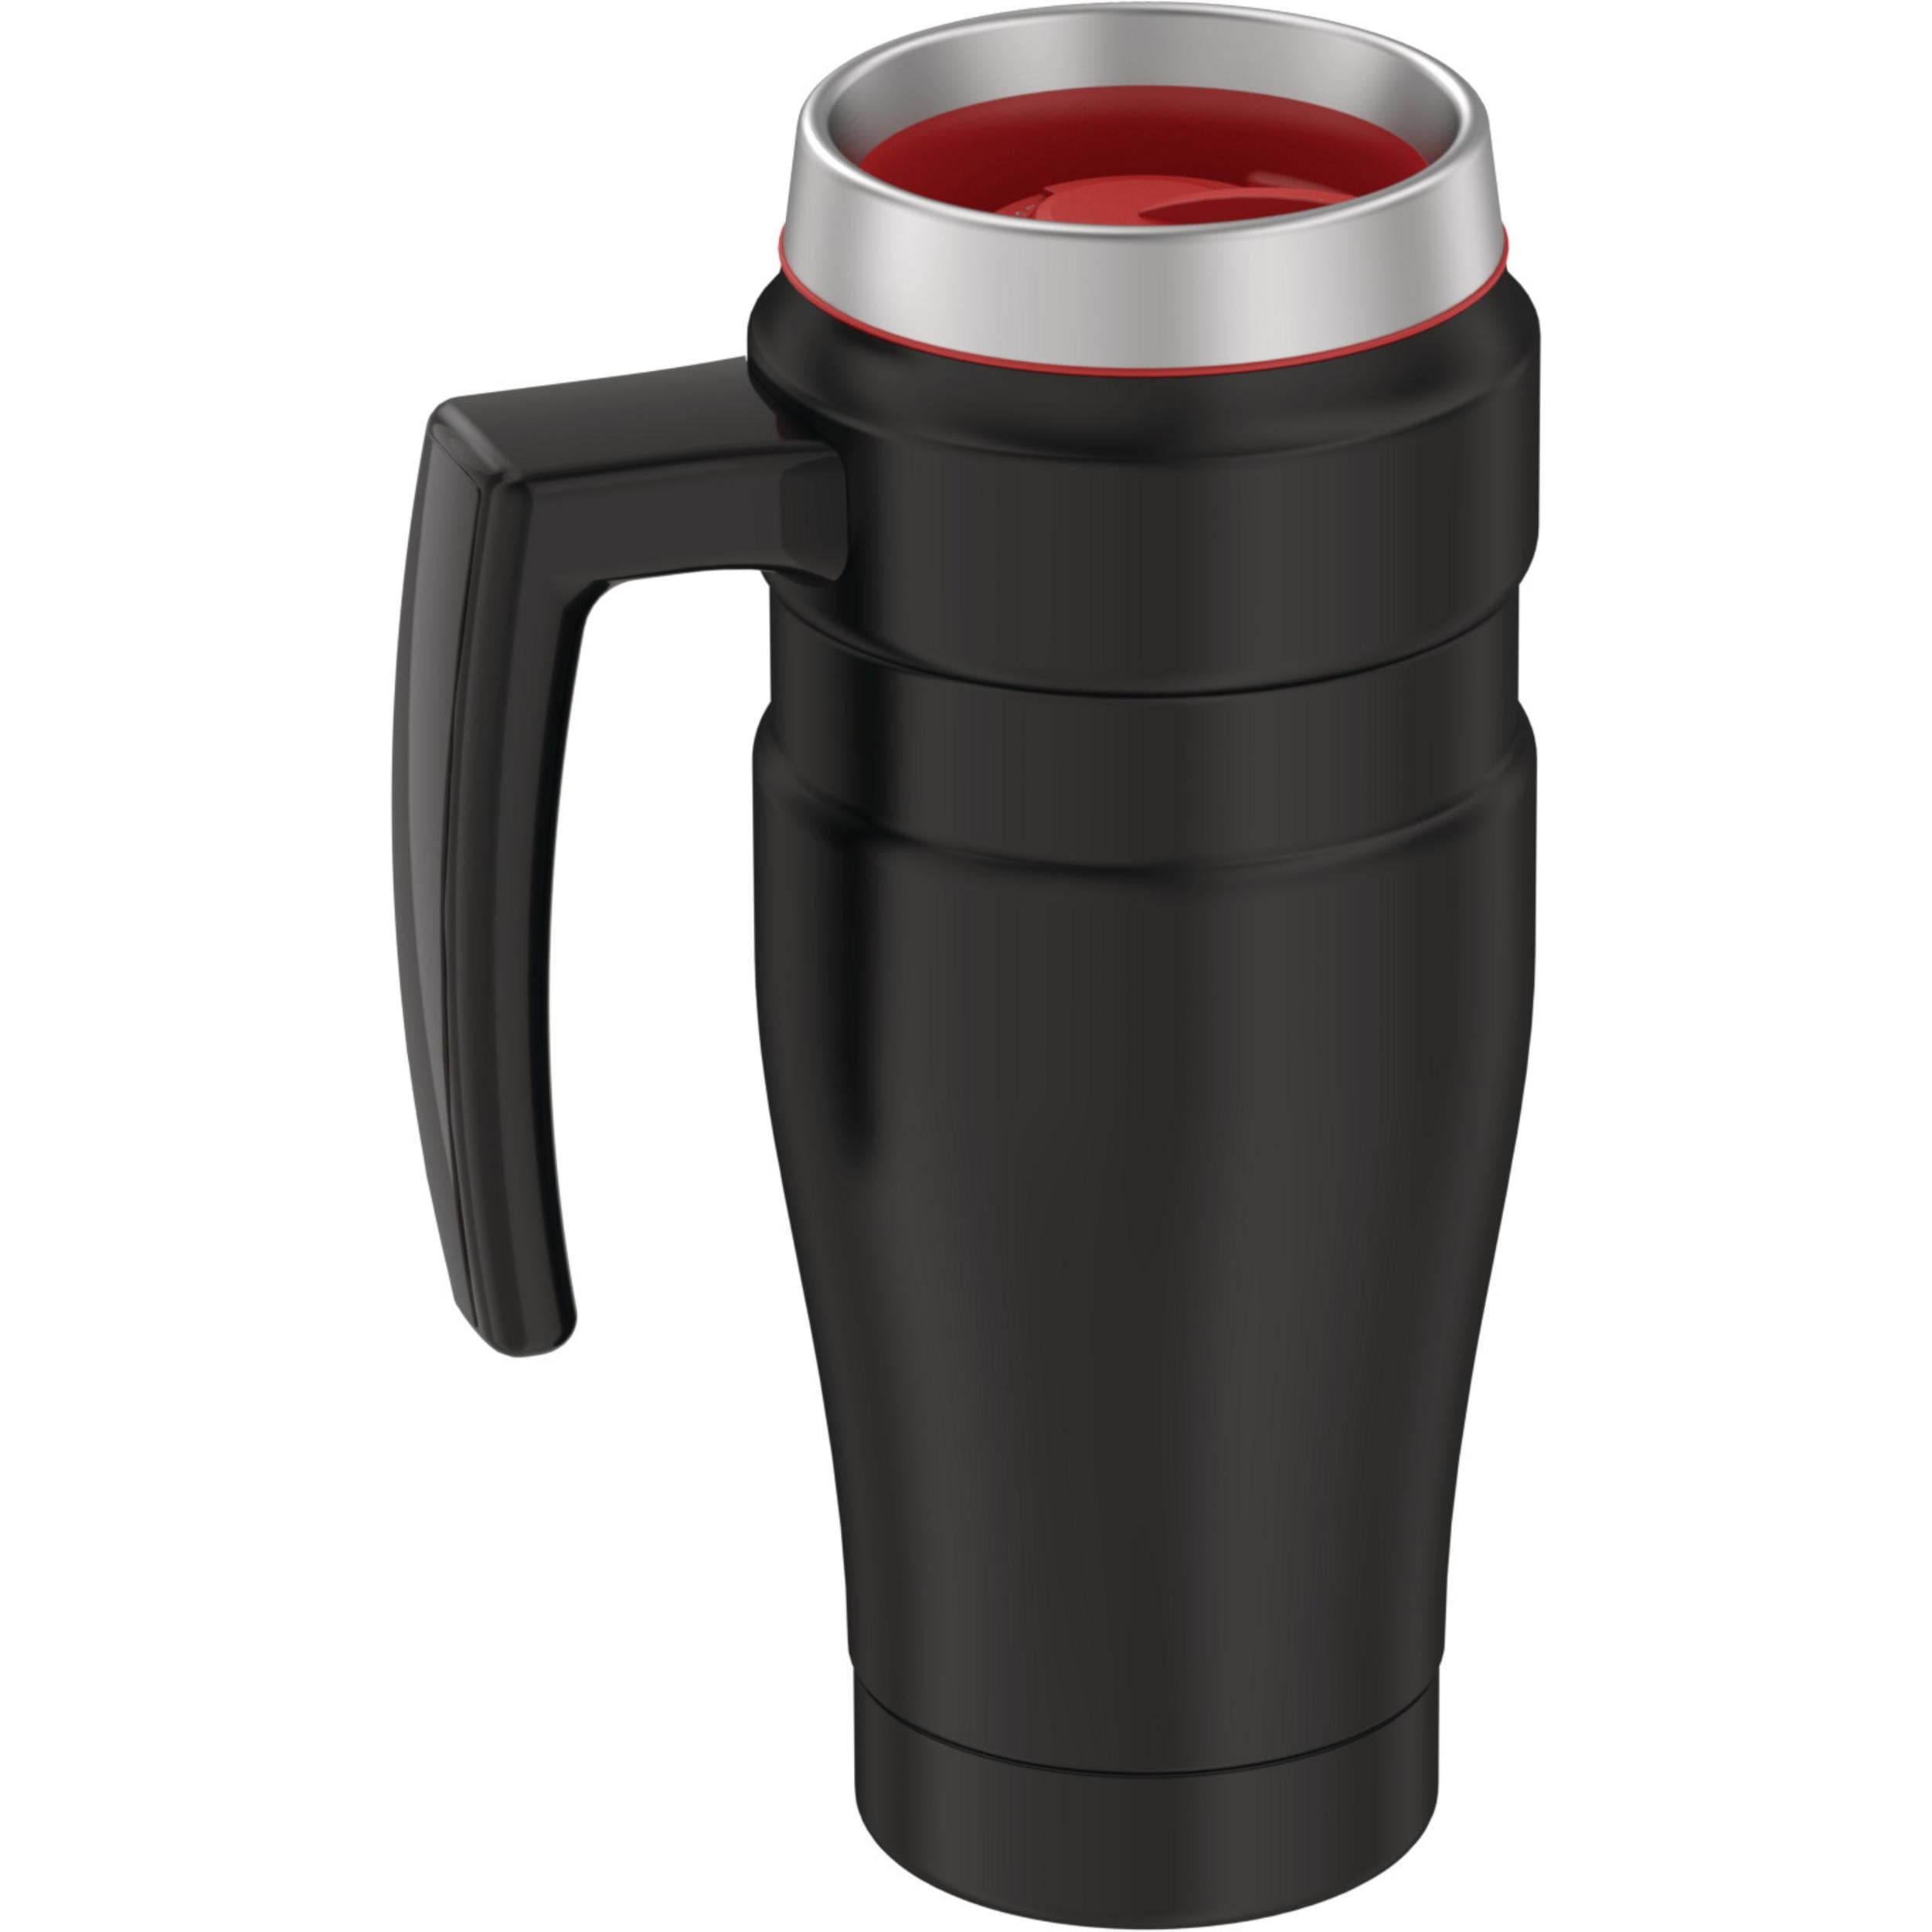 KingStar S11450F2 Thermos Stainless Steel Water Bottle Travel Mug